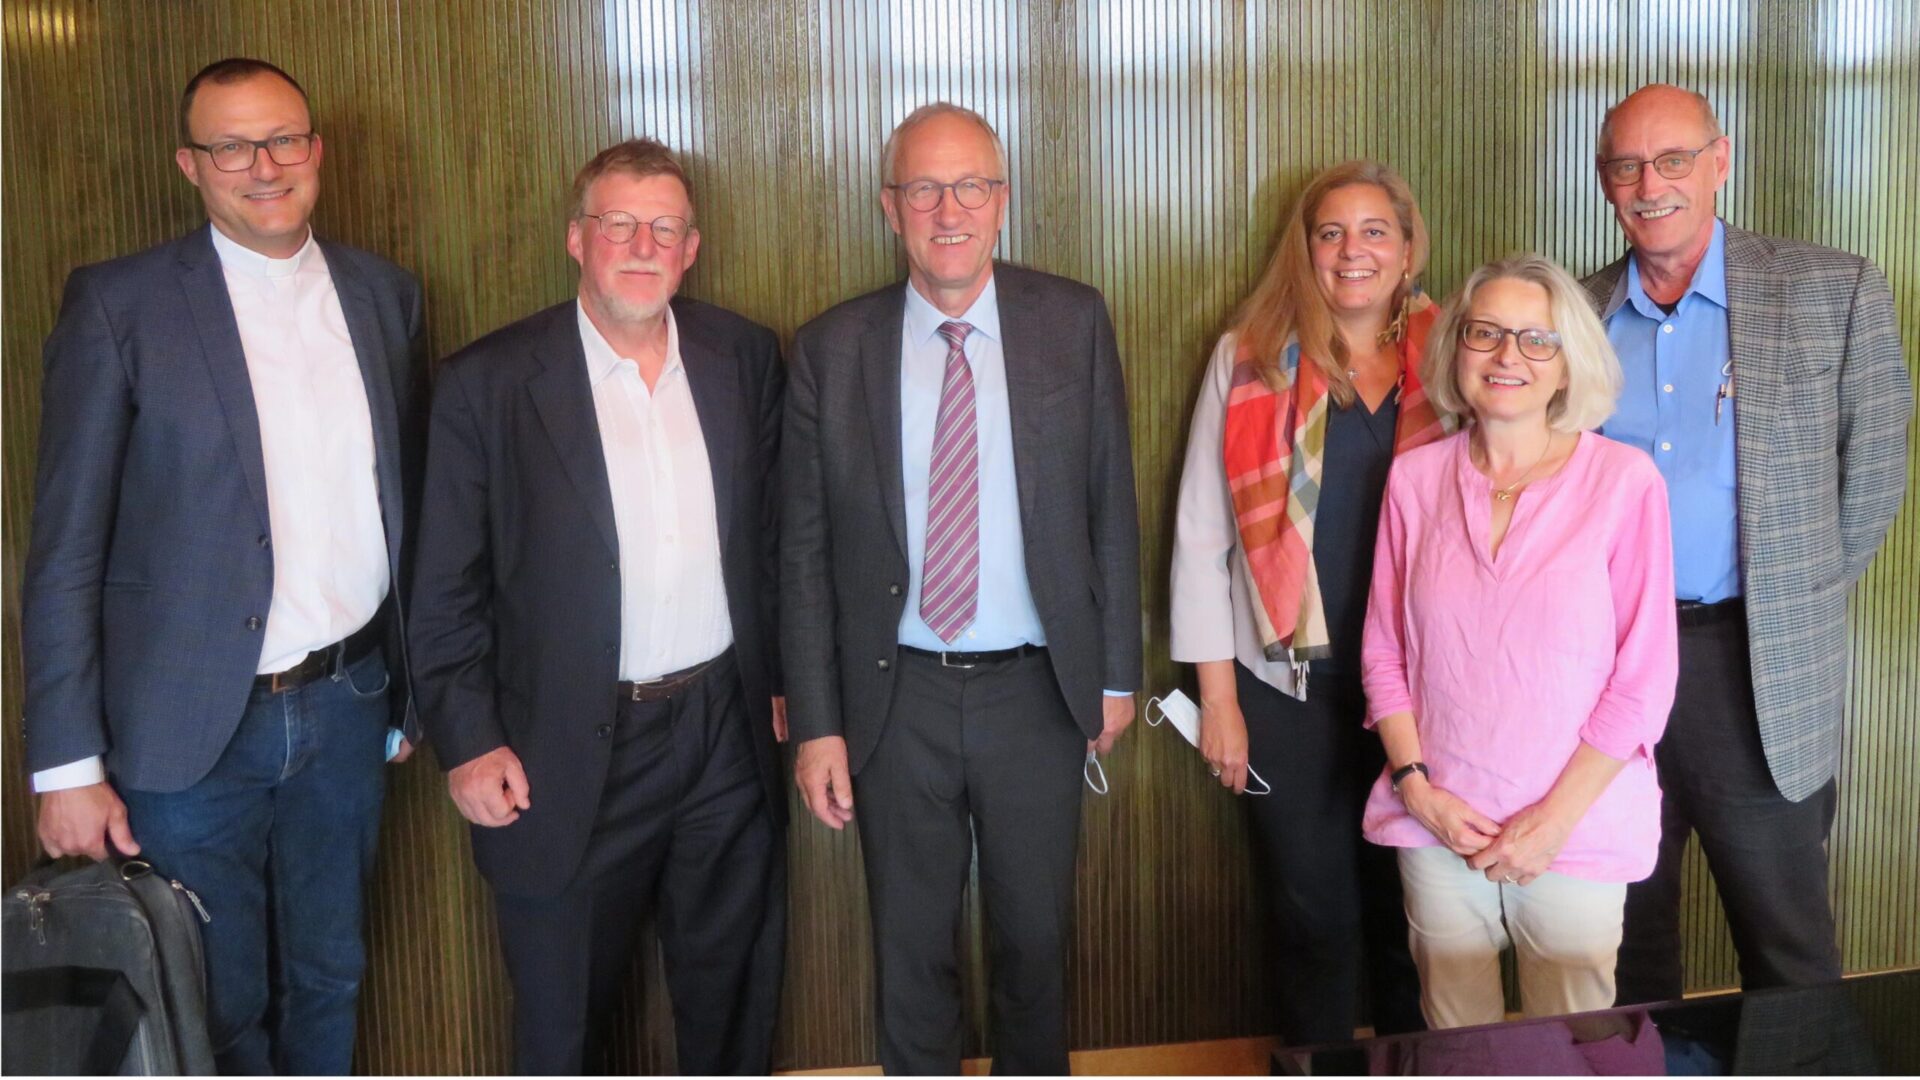 Da sinistra: Andreas Rellstab (Vicepresidente), Jacques Berset, Peter Hegglin (Presidente), Beryl Niedermann, Madeleine Winterhalter, Urs Staub. (Foto: MI)